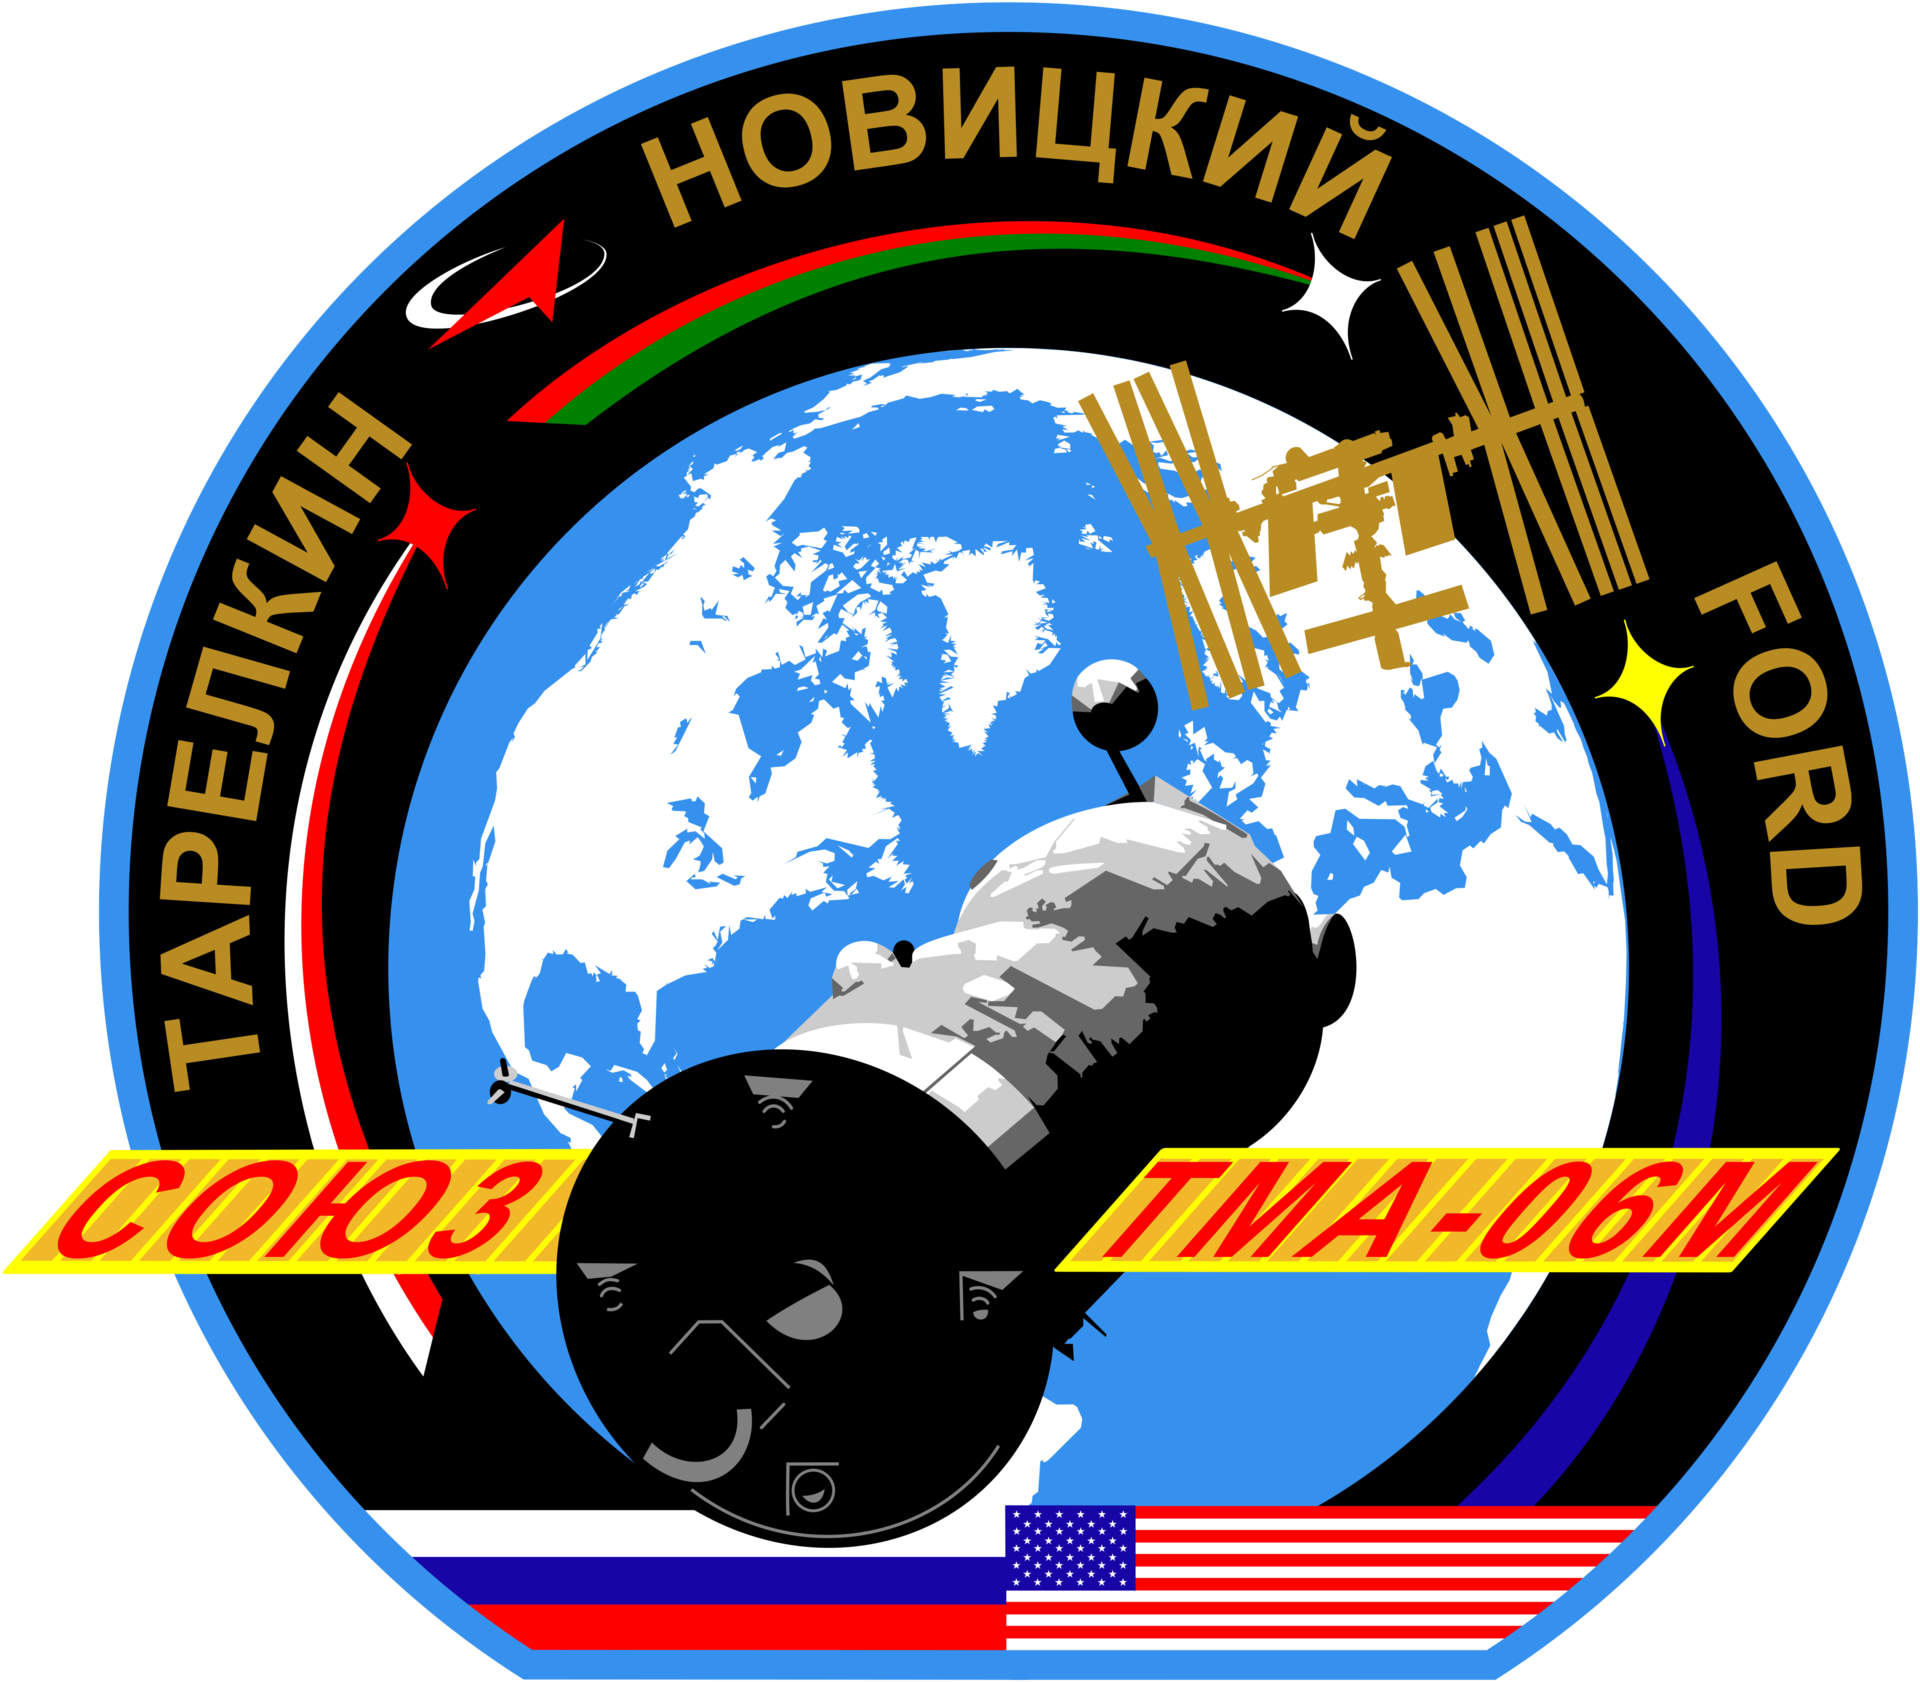 Mission patch for Soyuz TMA-06M